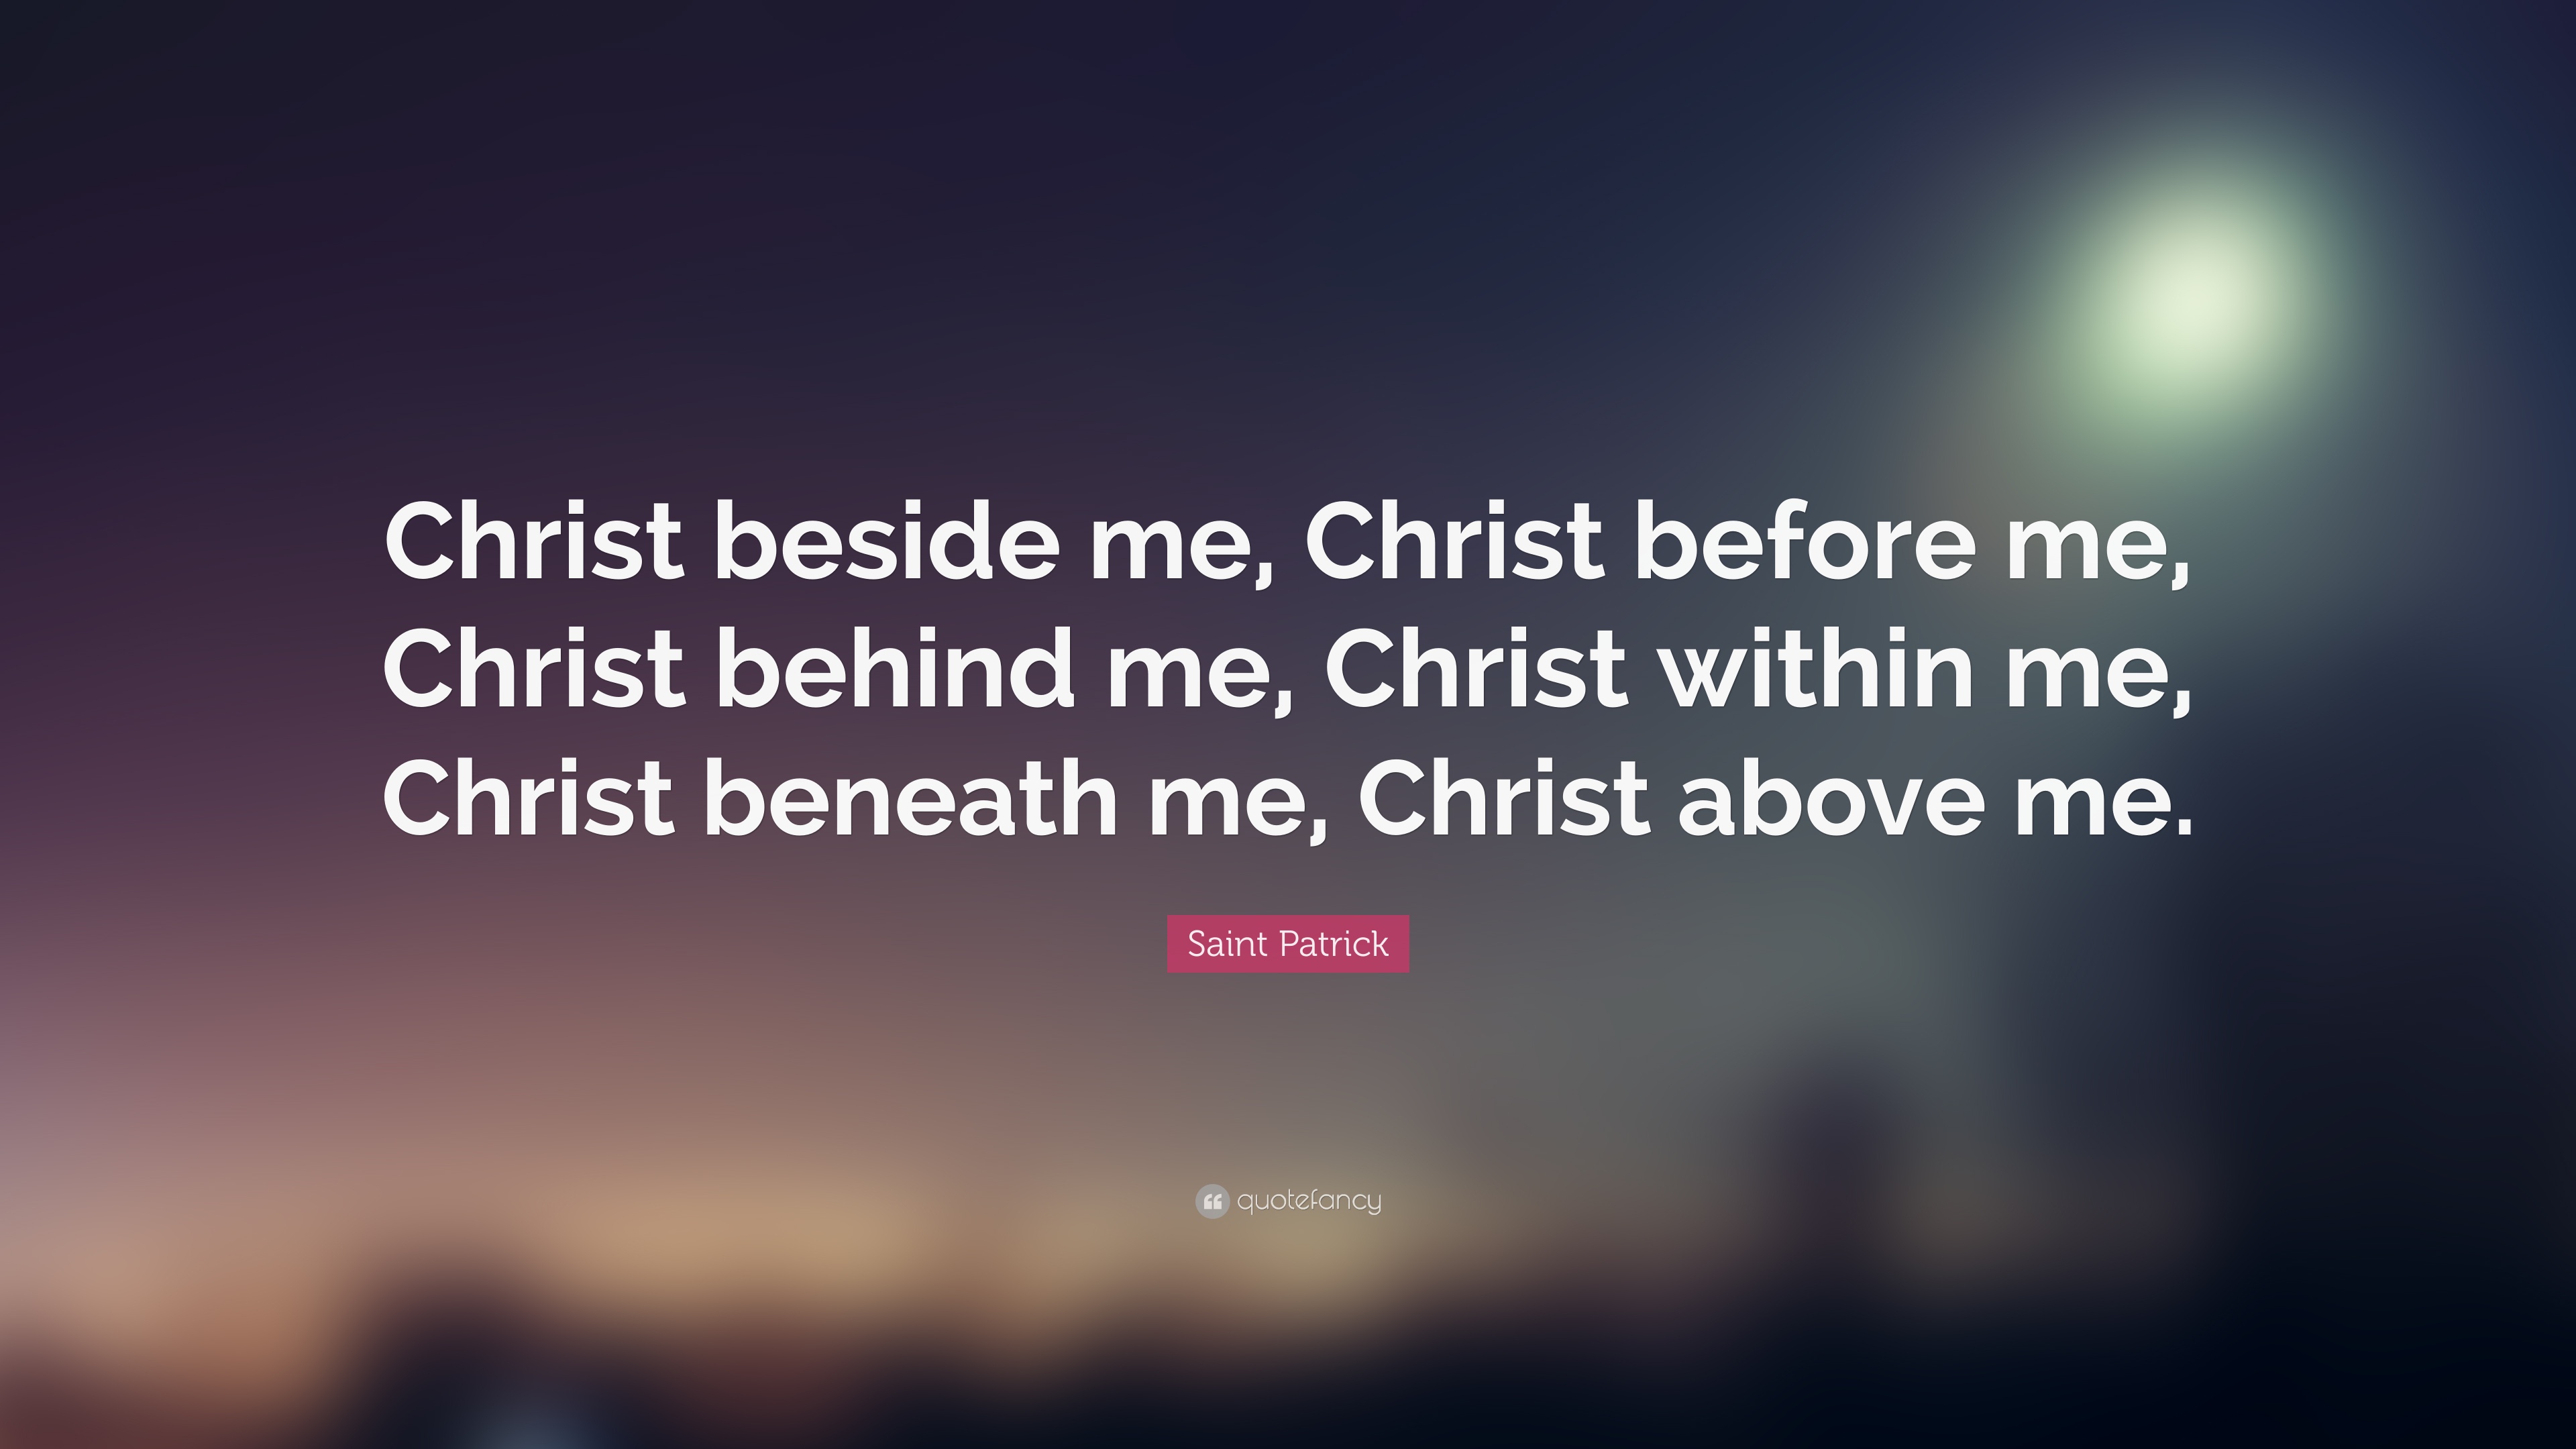 Saint Patrick Quote: “Christ beside me, Christ before me, Christ ...